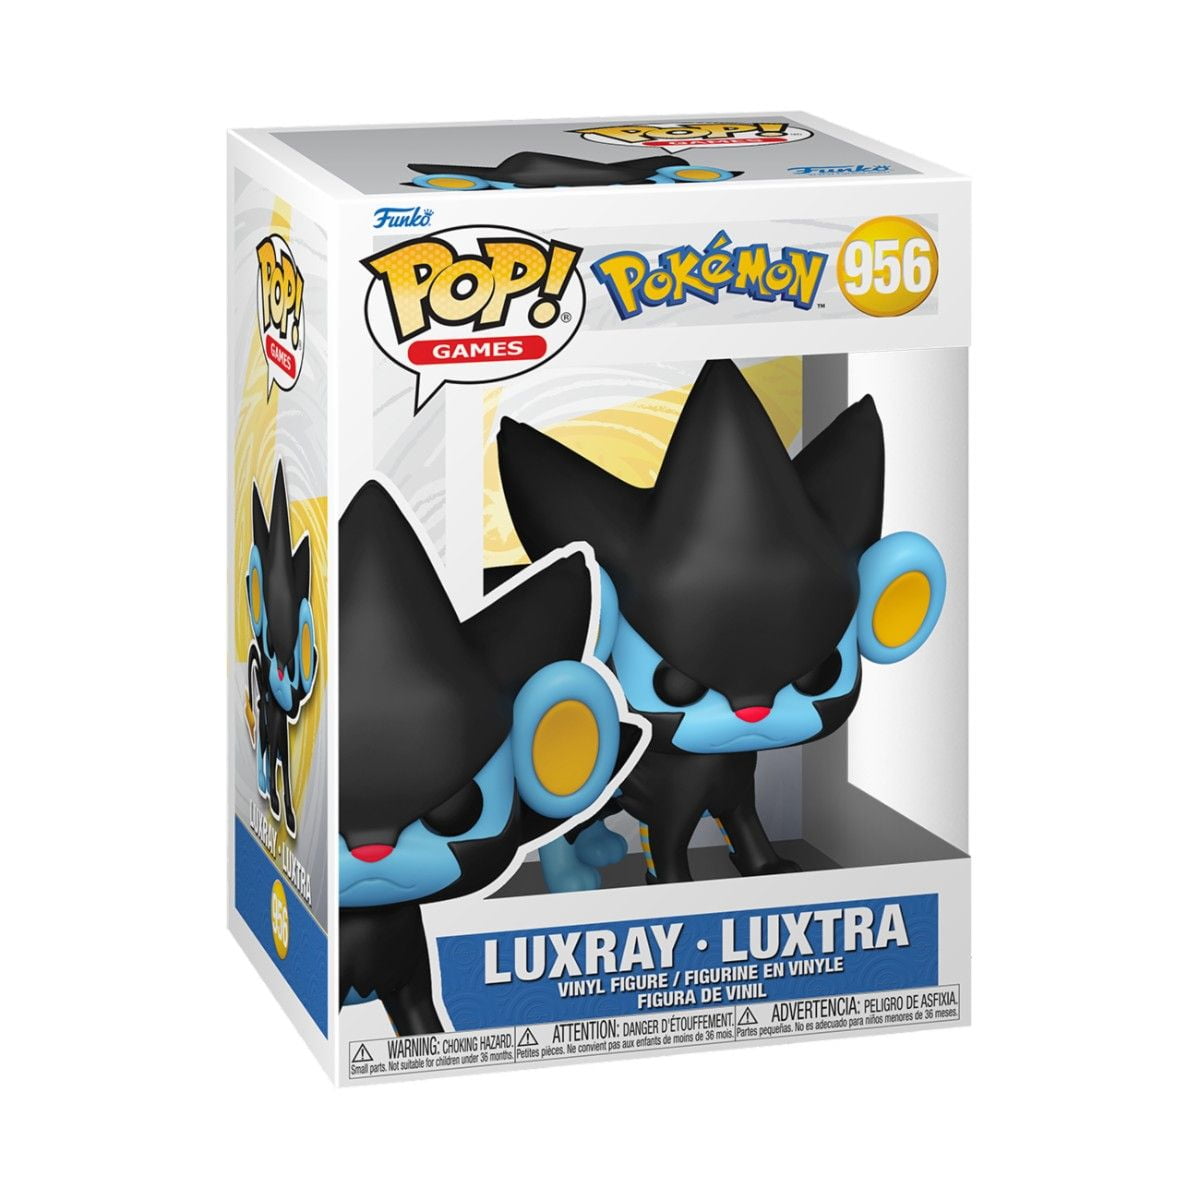 Luxray - Pokemon - Funko POP! Games (956)